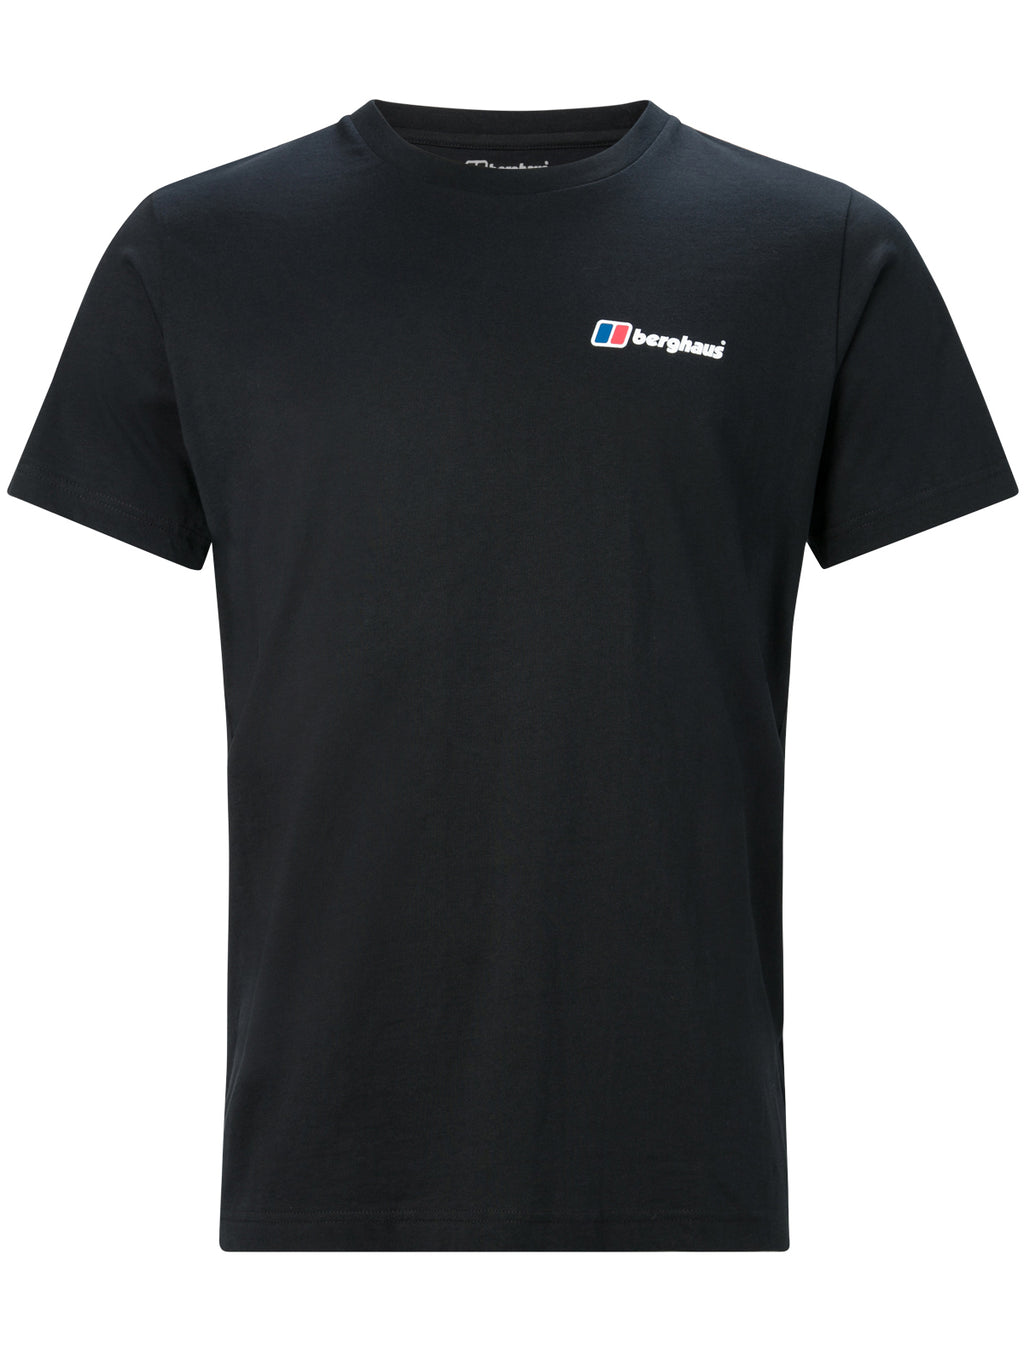 Berghaus Men's Corporate Logo promotional T-shirt